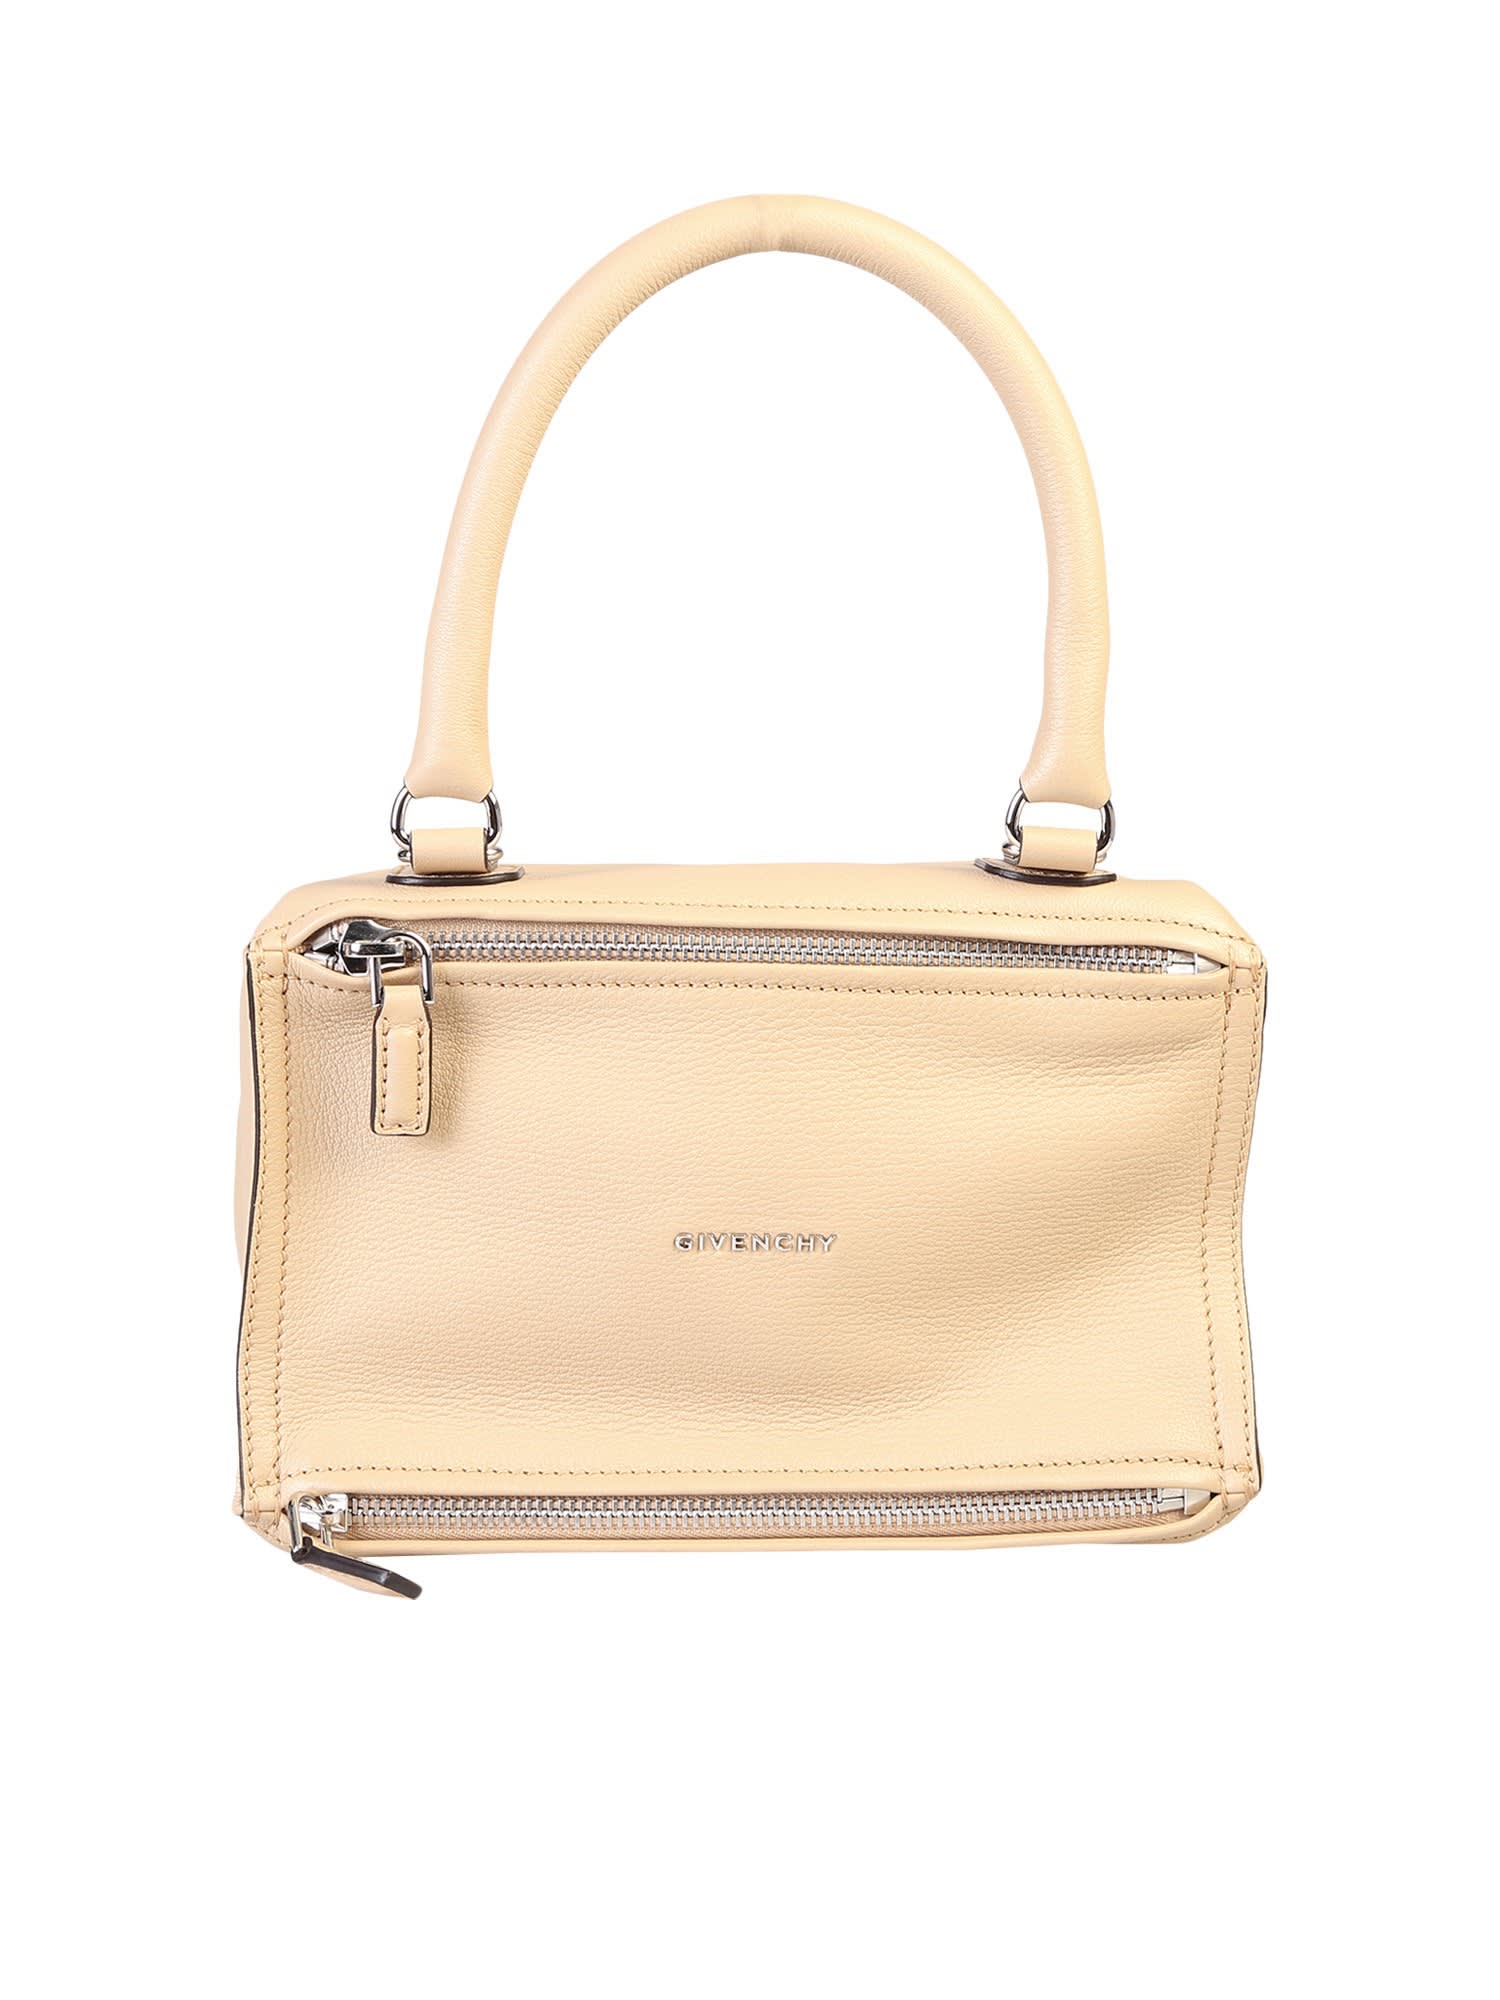 Givenchy Pandora M Bag In Beige